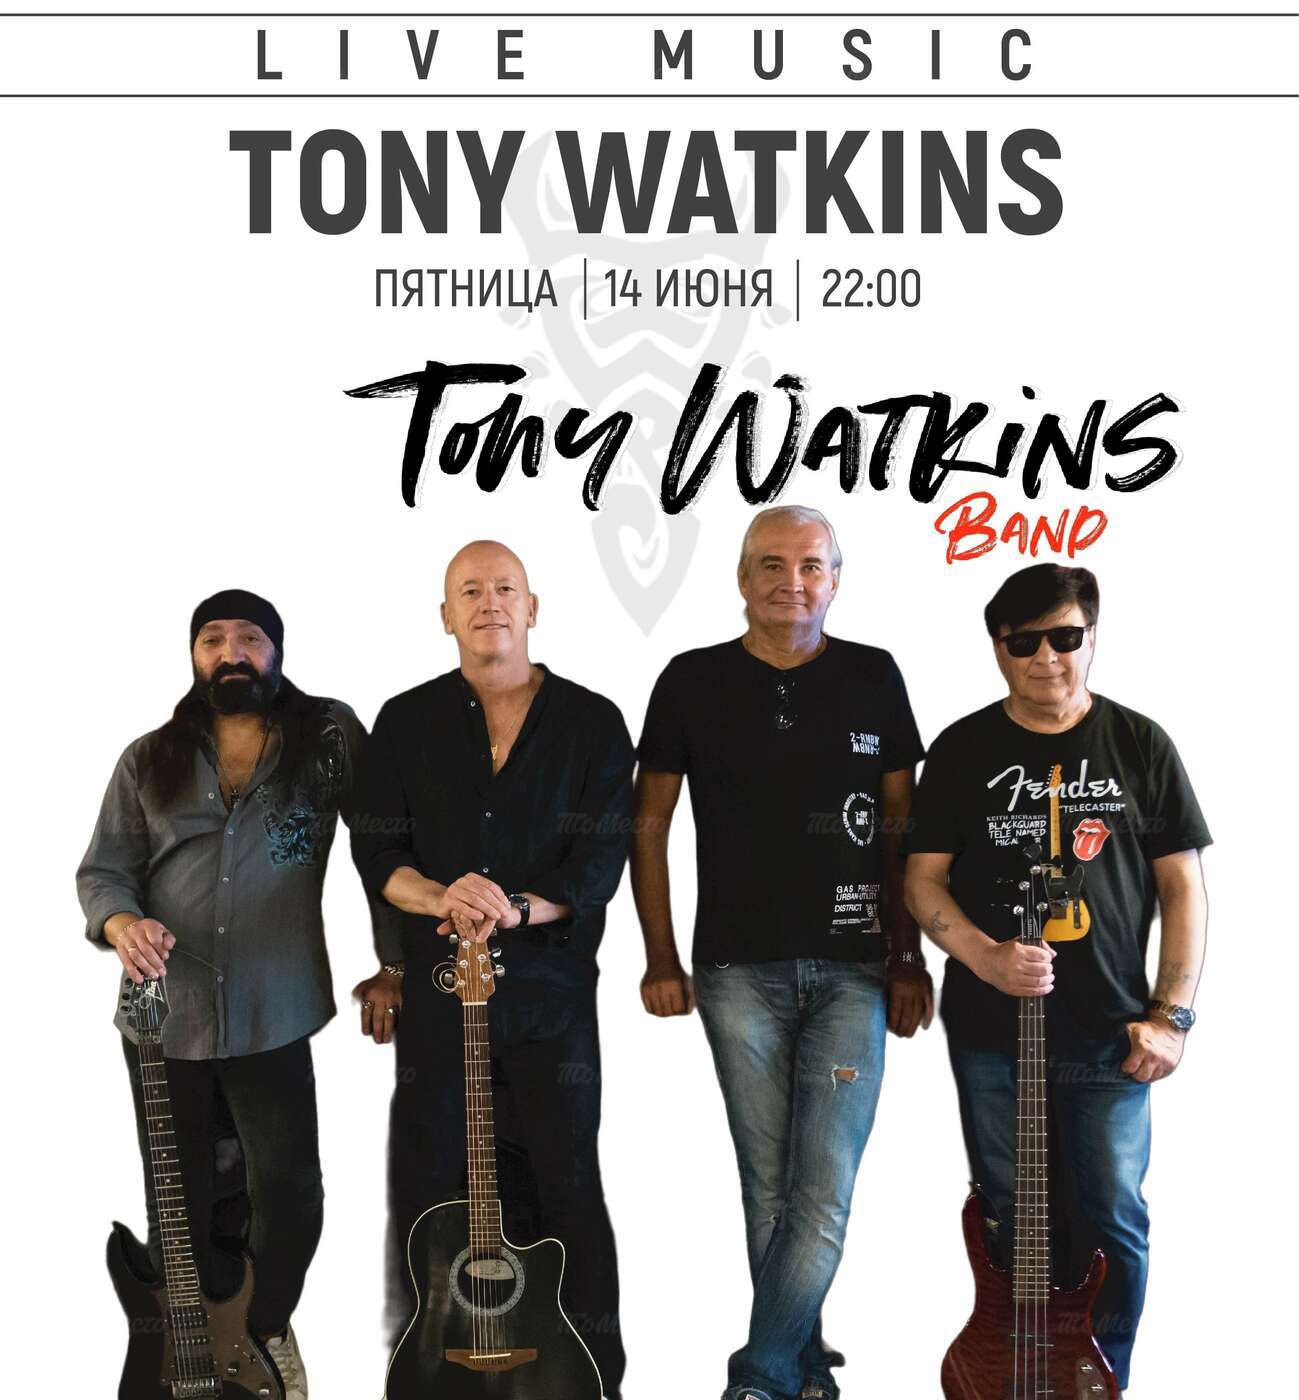 Tony Watkins Band